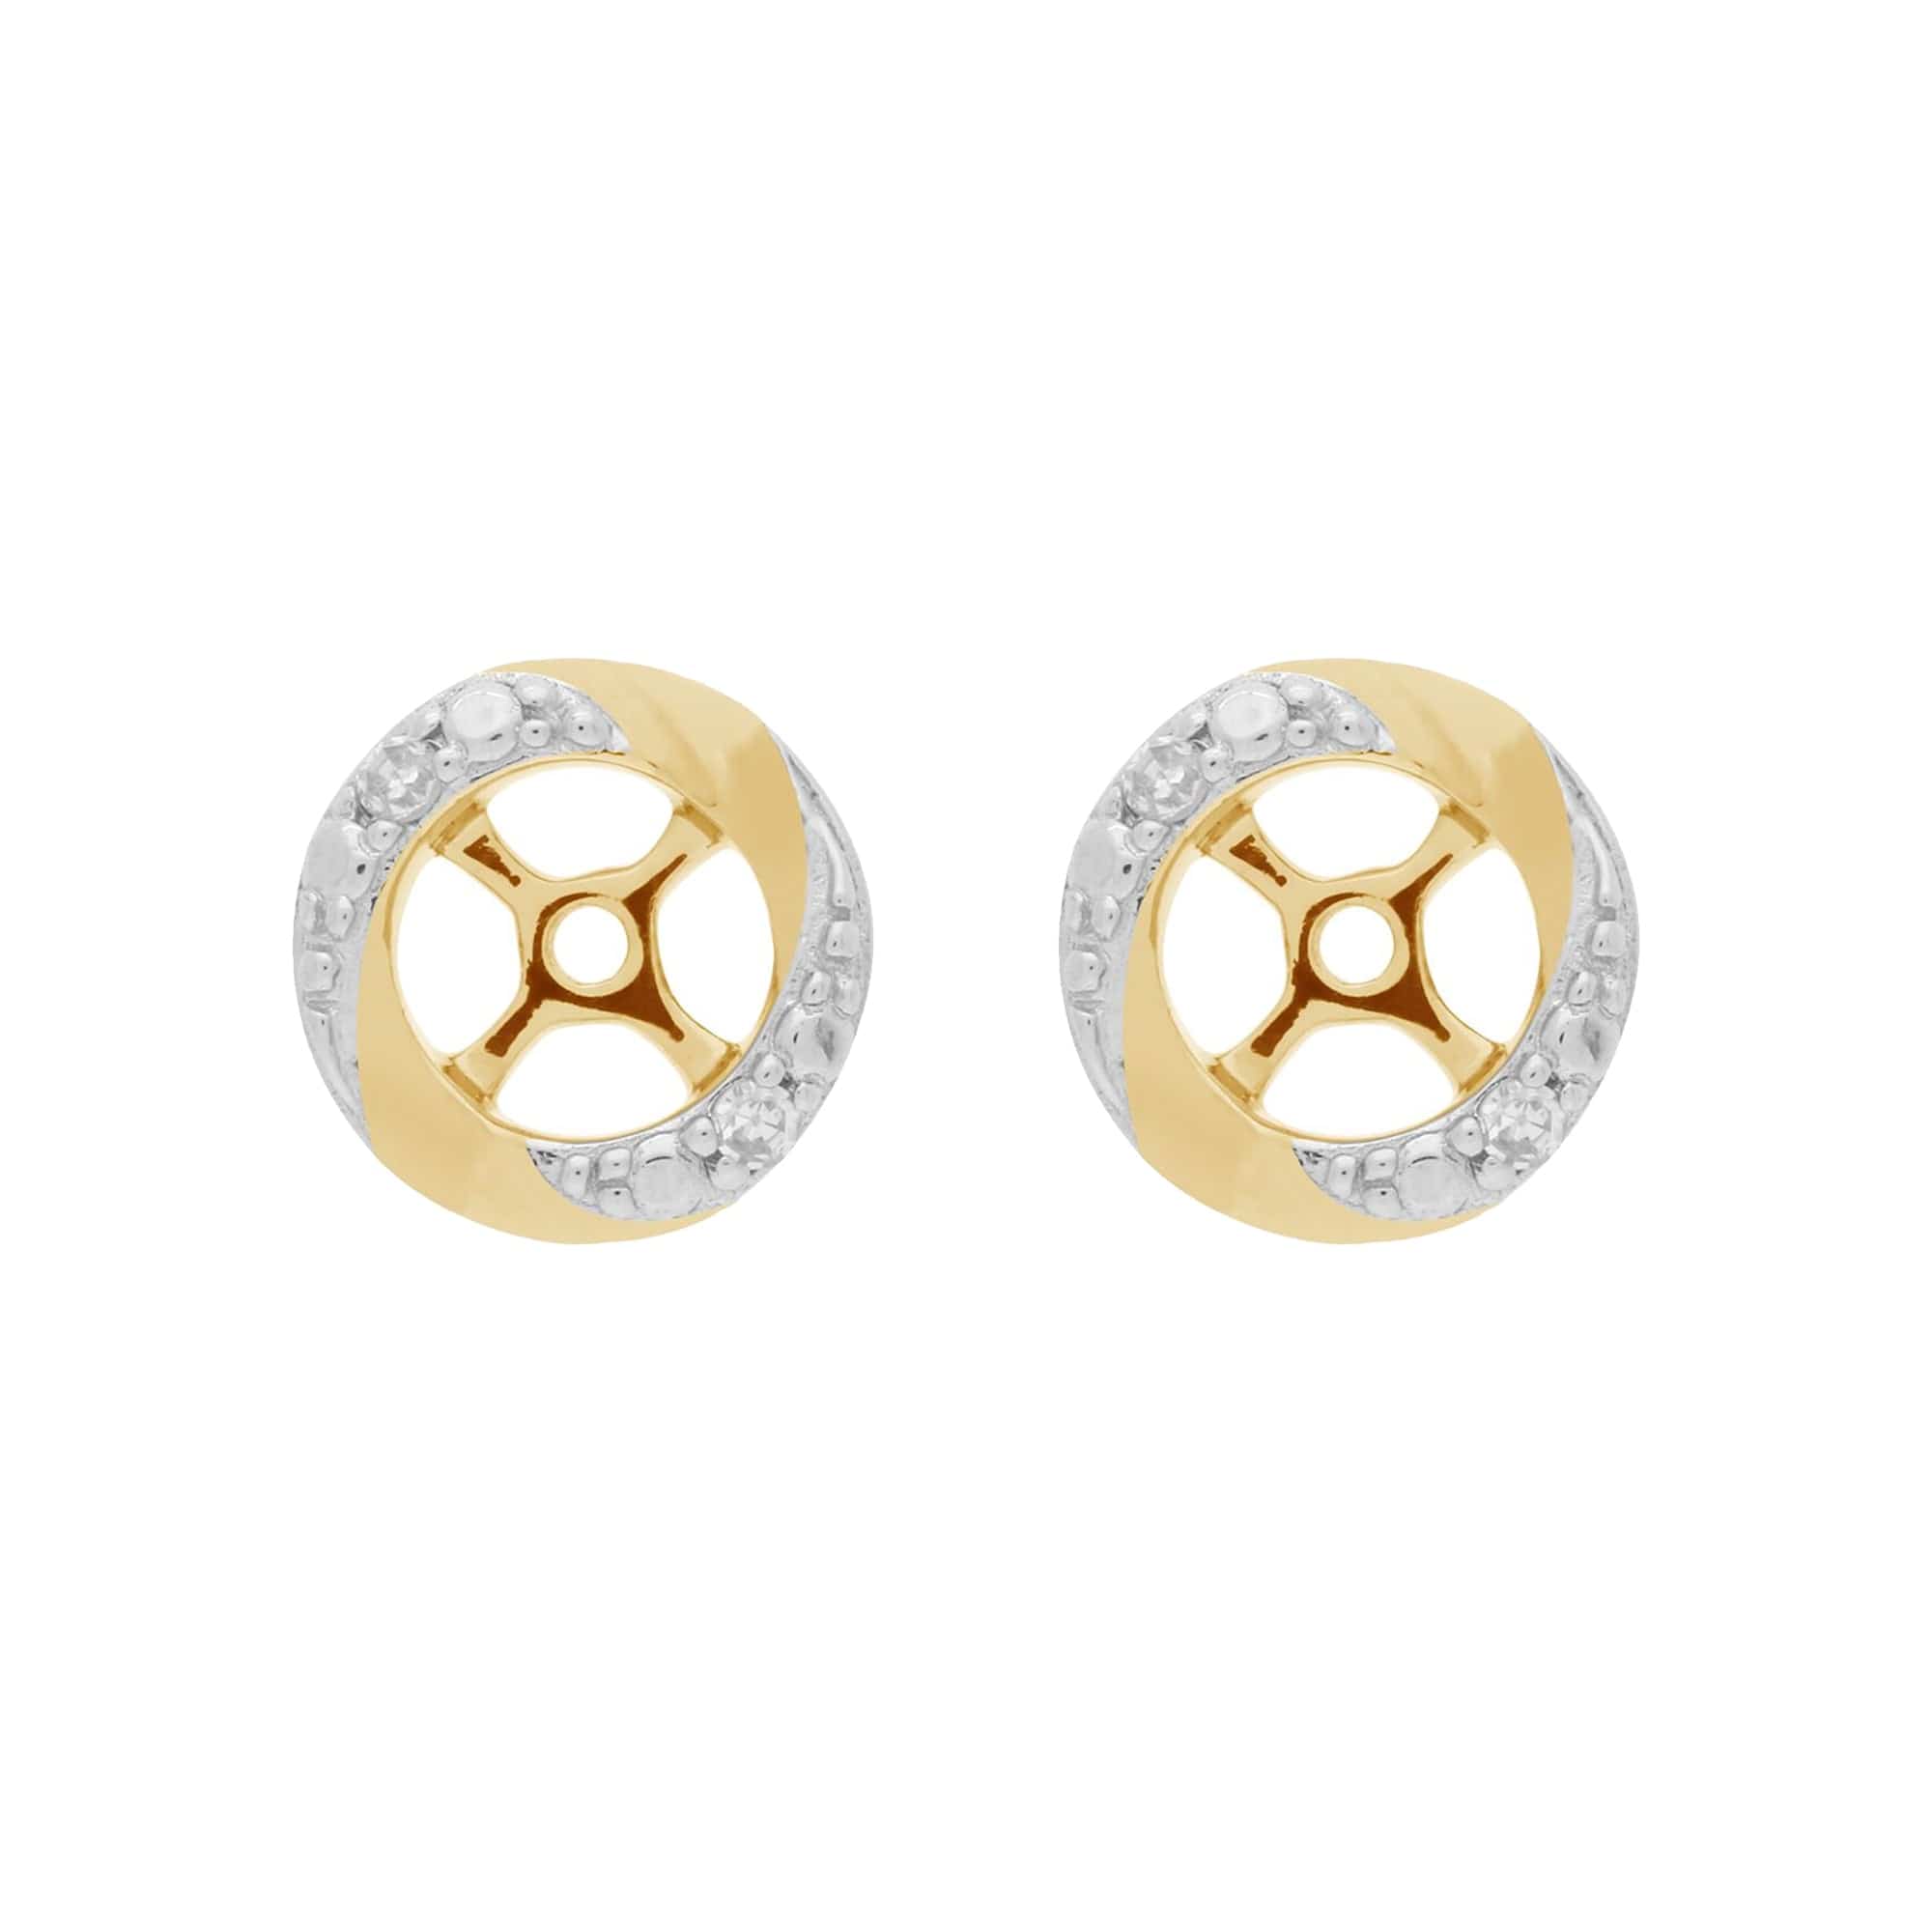 Classic Round Peridot Stud Earrings with Detachable Diamond Halo Ear Jacket in 9ct Yellow Gold - Gemondo